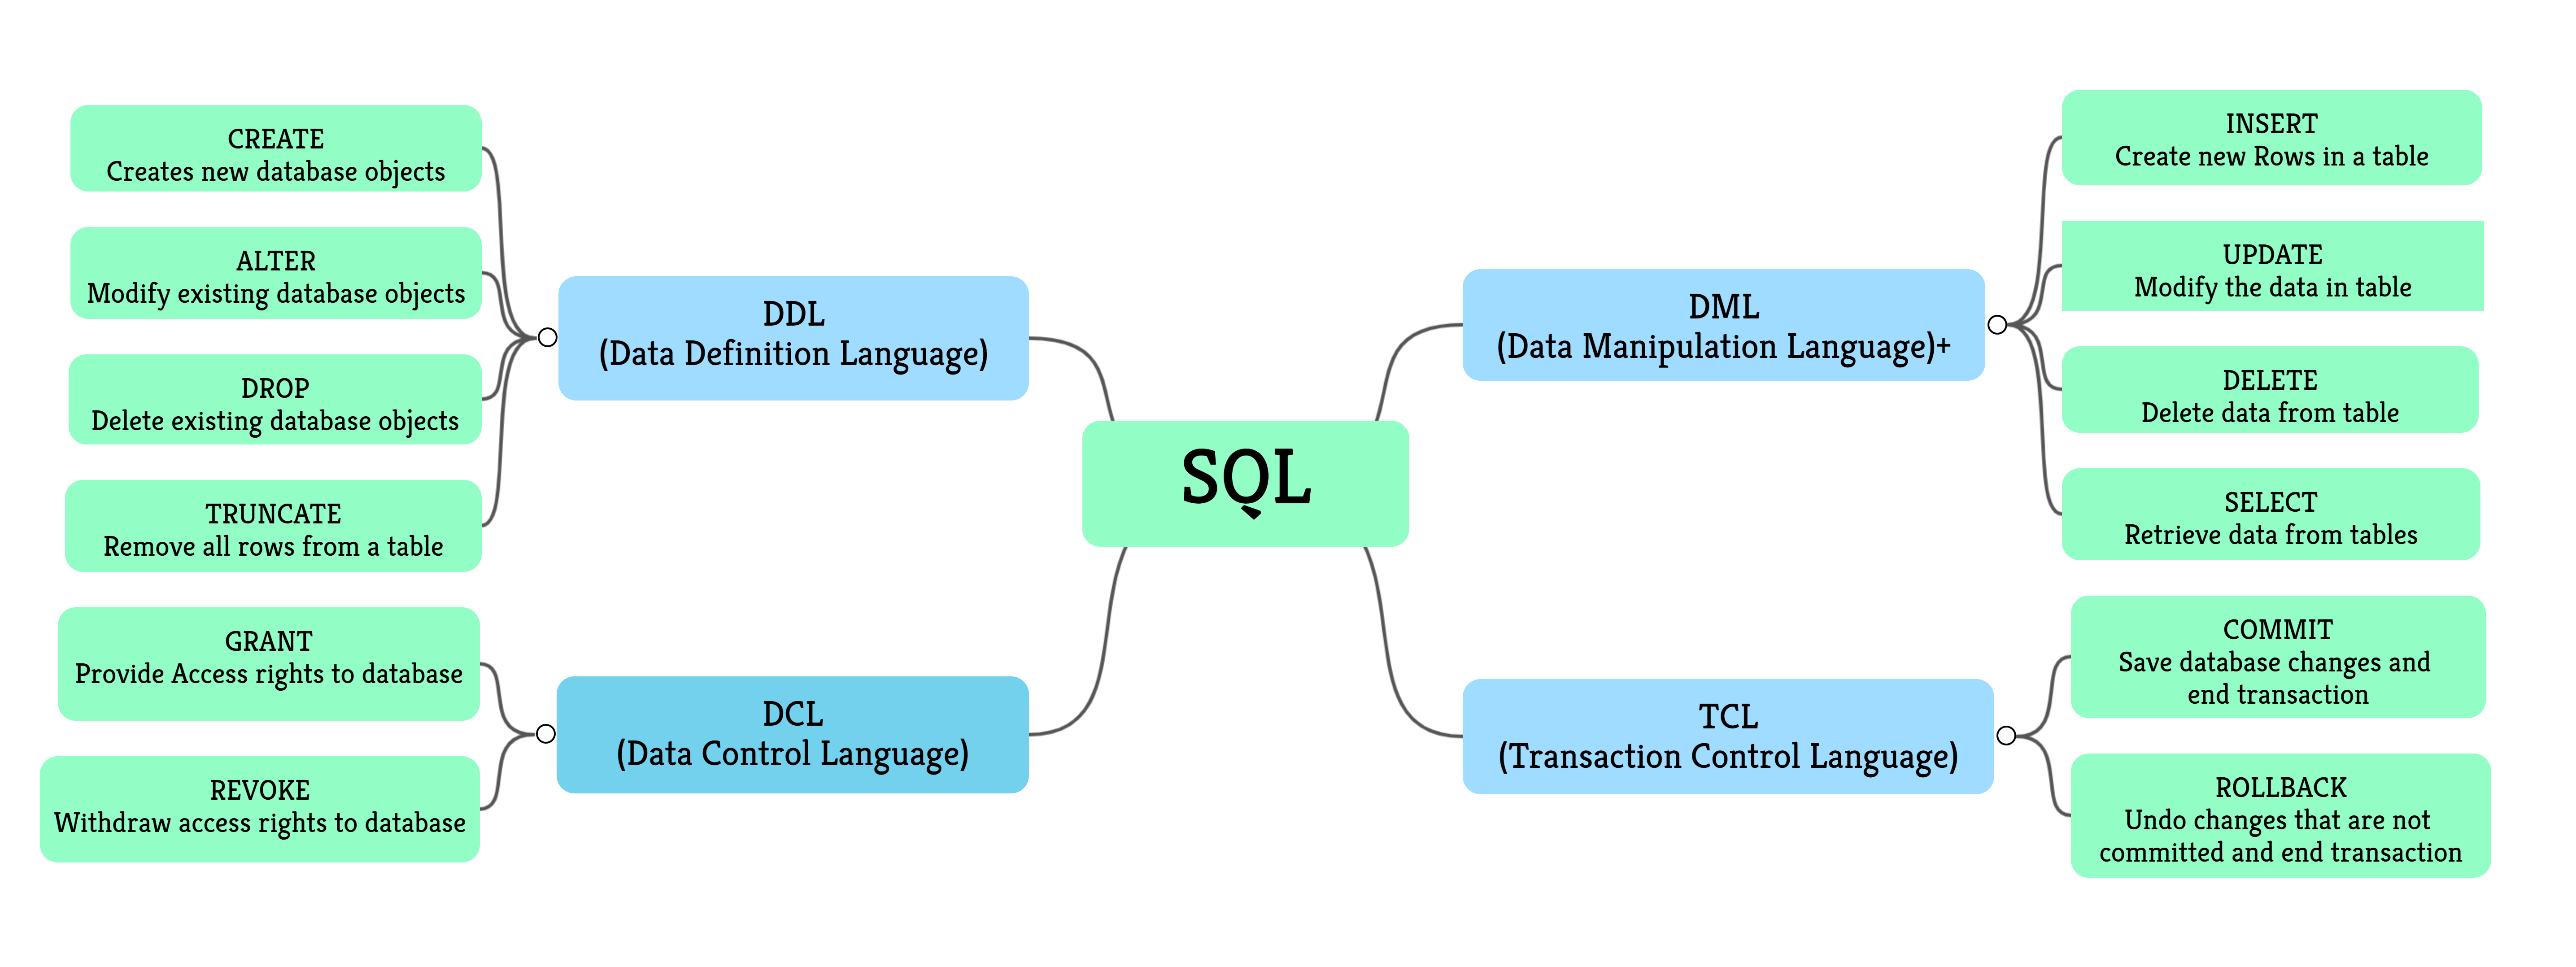 TCL (Transaction Control Language) | databases 